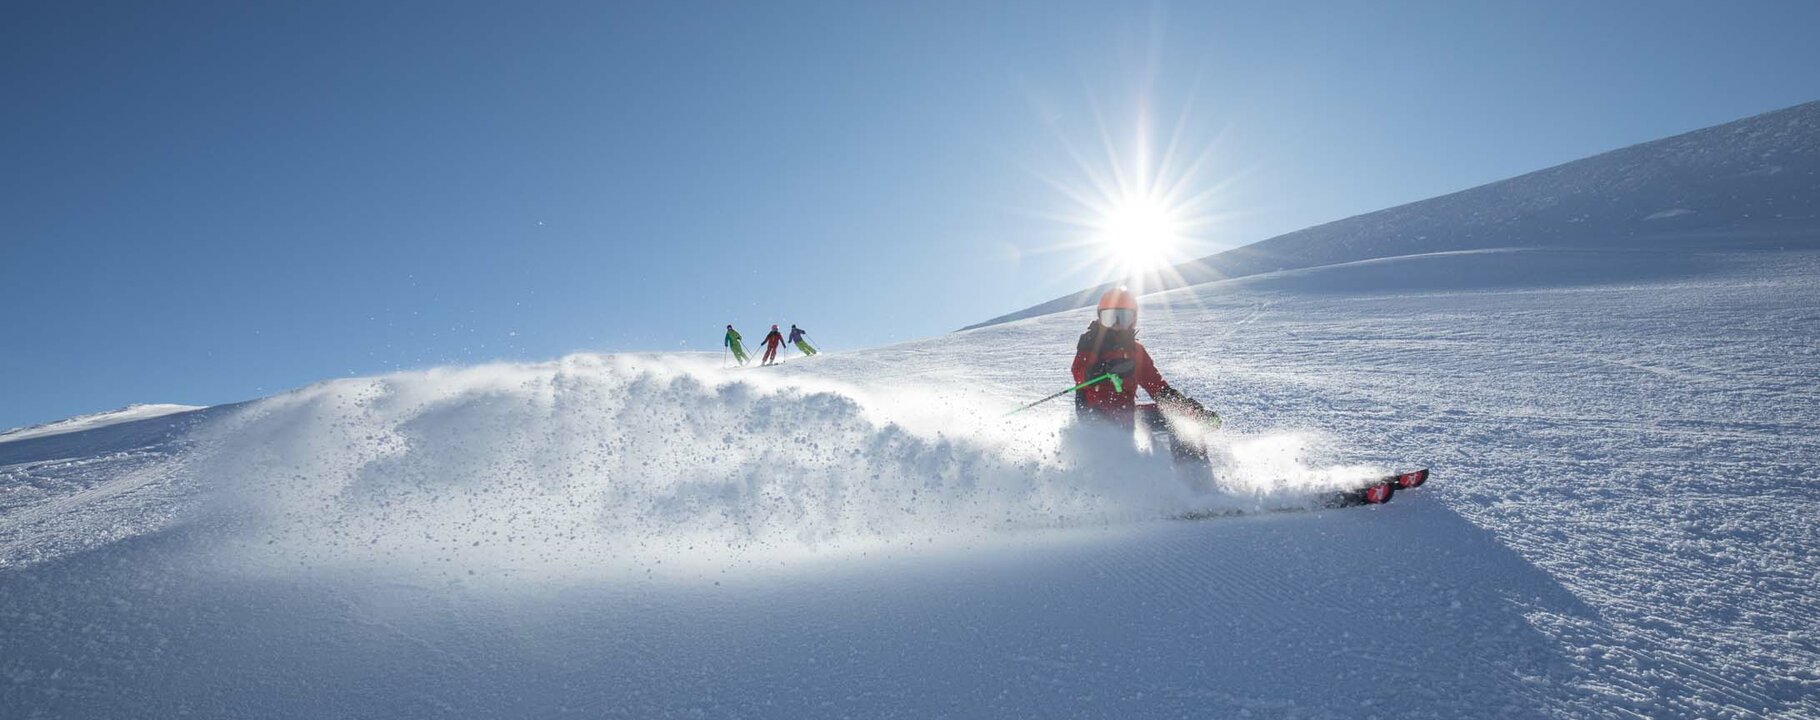 Skiing in Serfaus-Fiss-Ladis in Tyrol  | © Serfaus-Fiss-Ladis Marketing GmbH | Andreas Kirschner